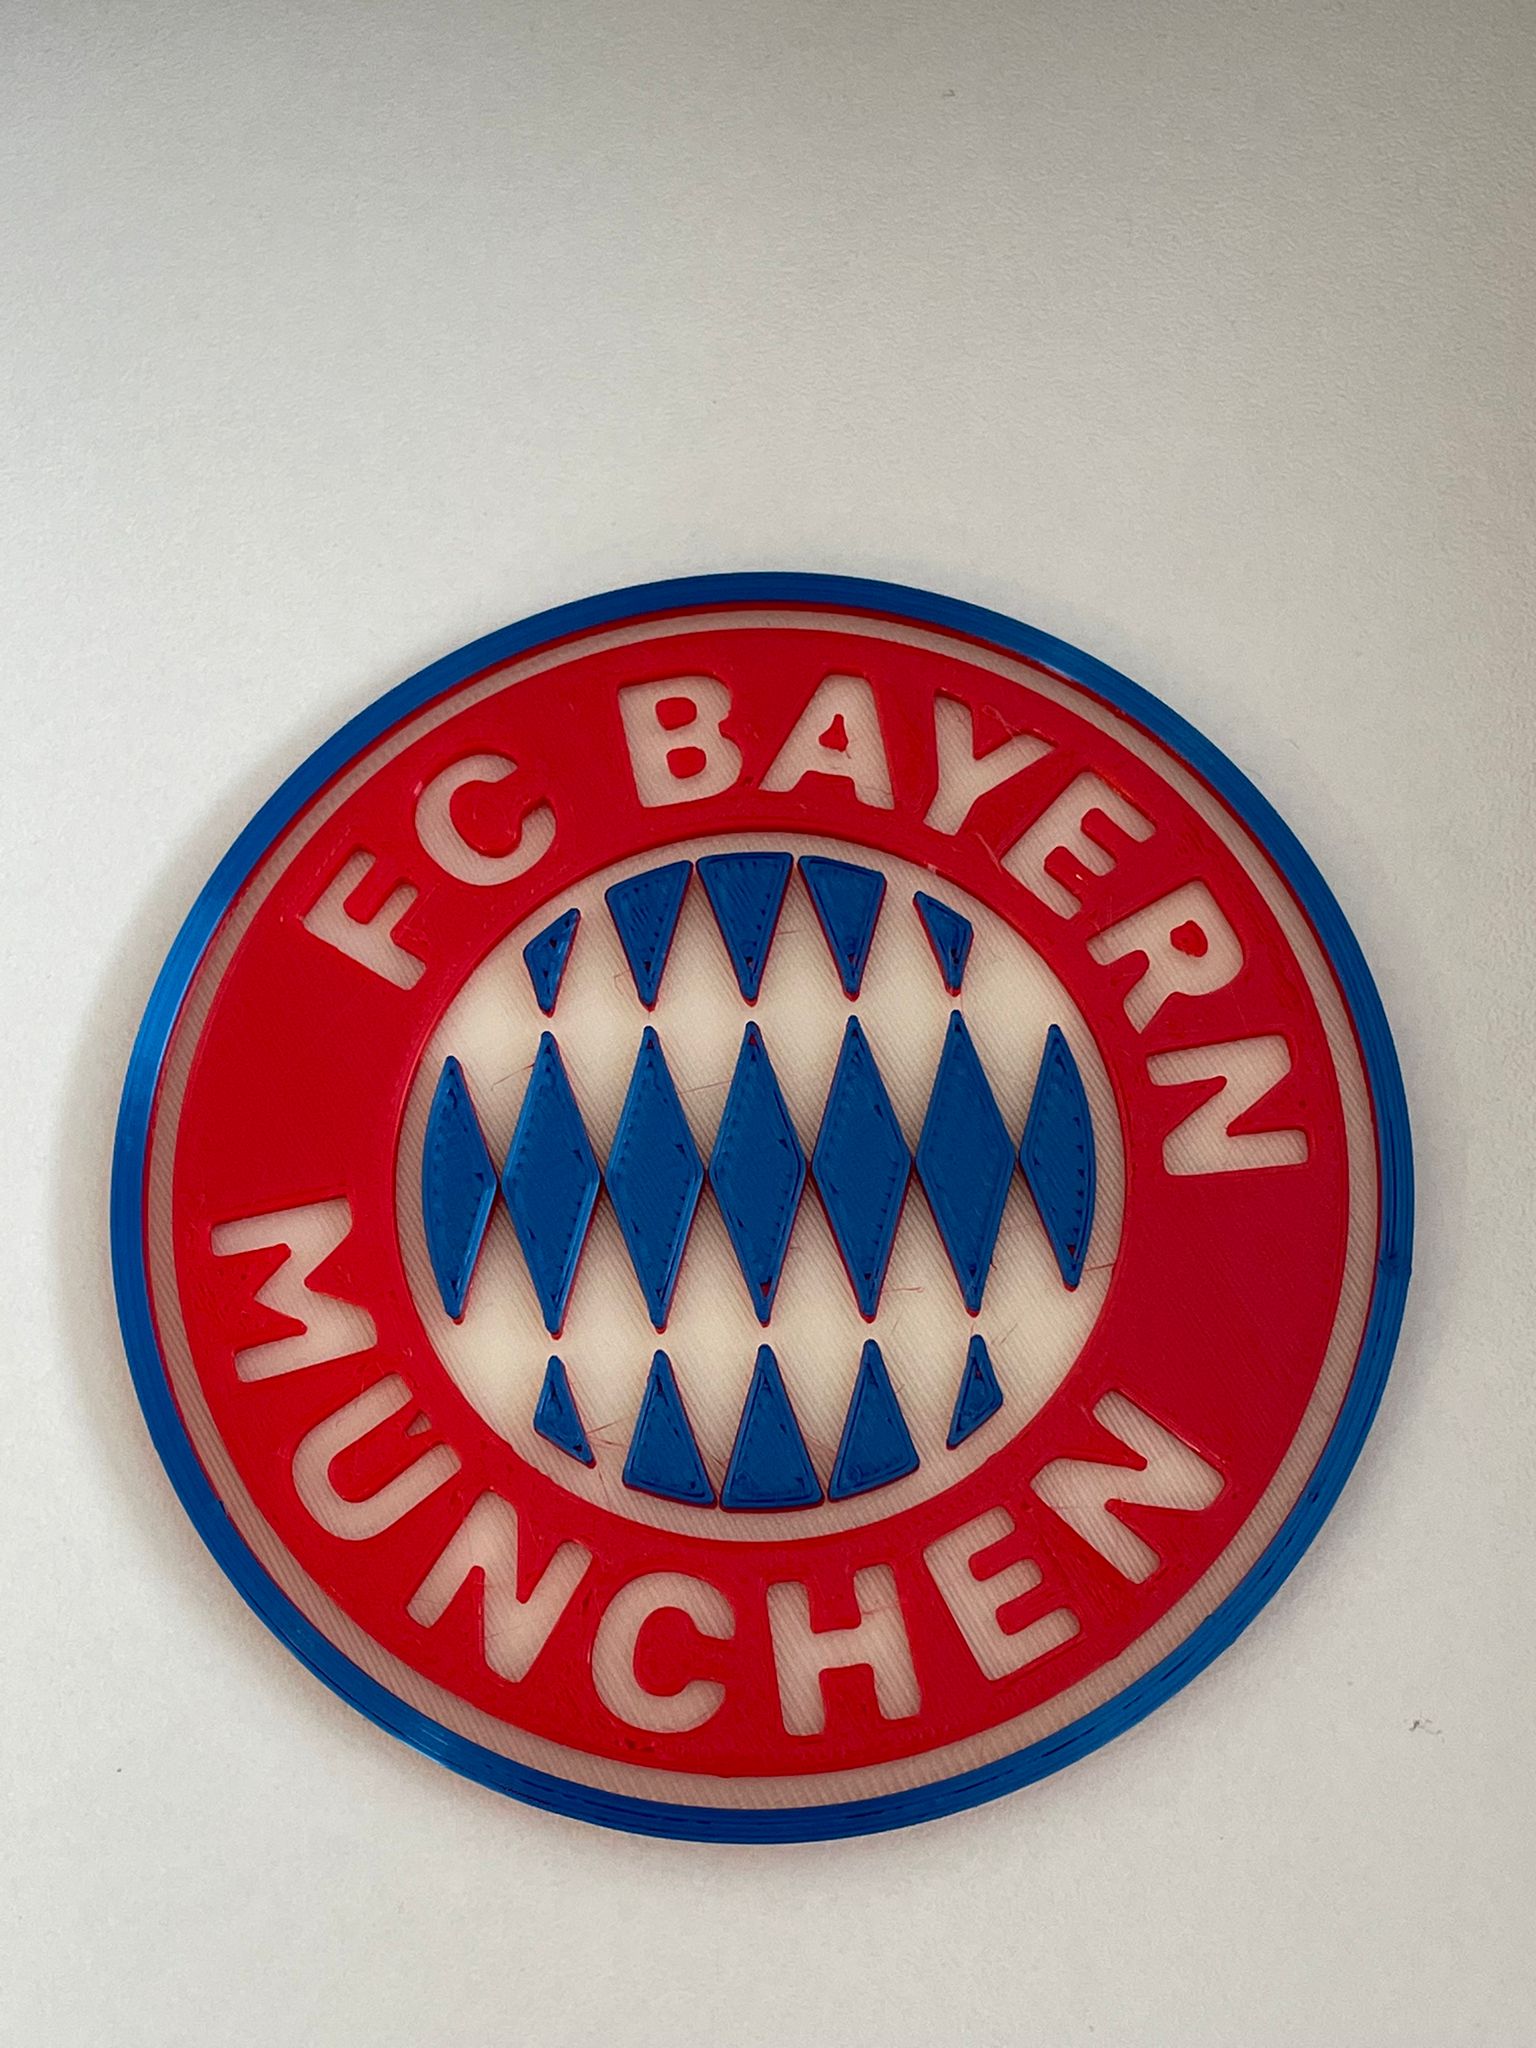 FC Bayern Munich / München coaster for 3 colours without MMU